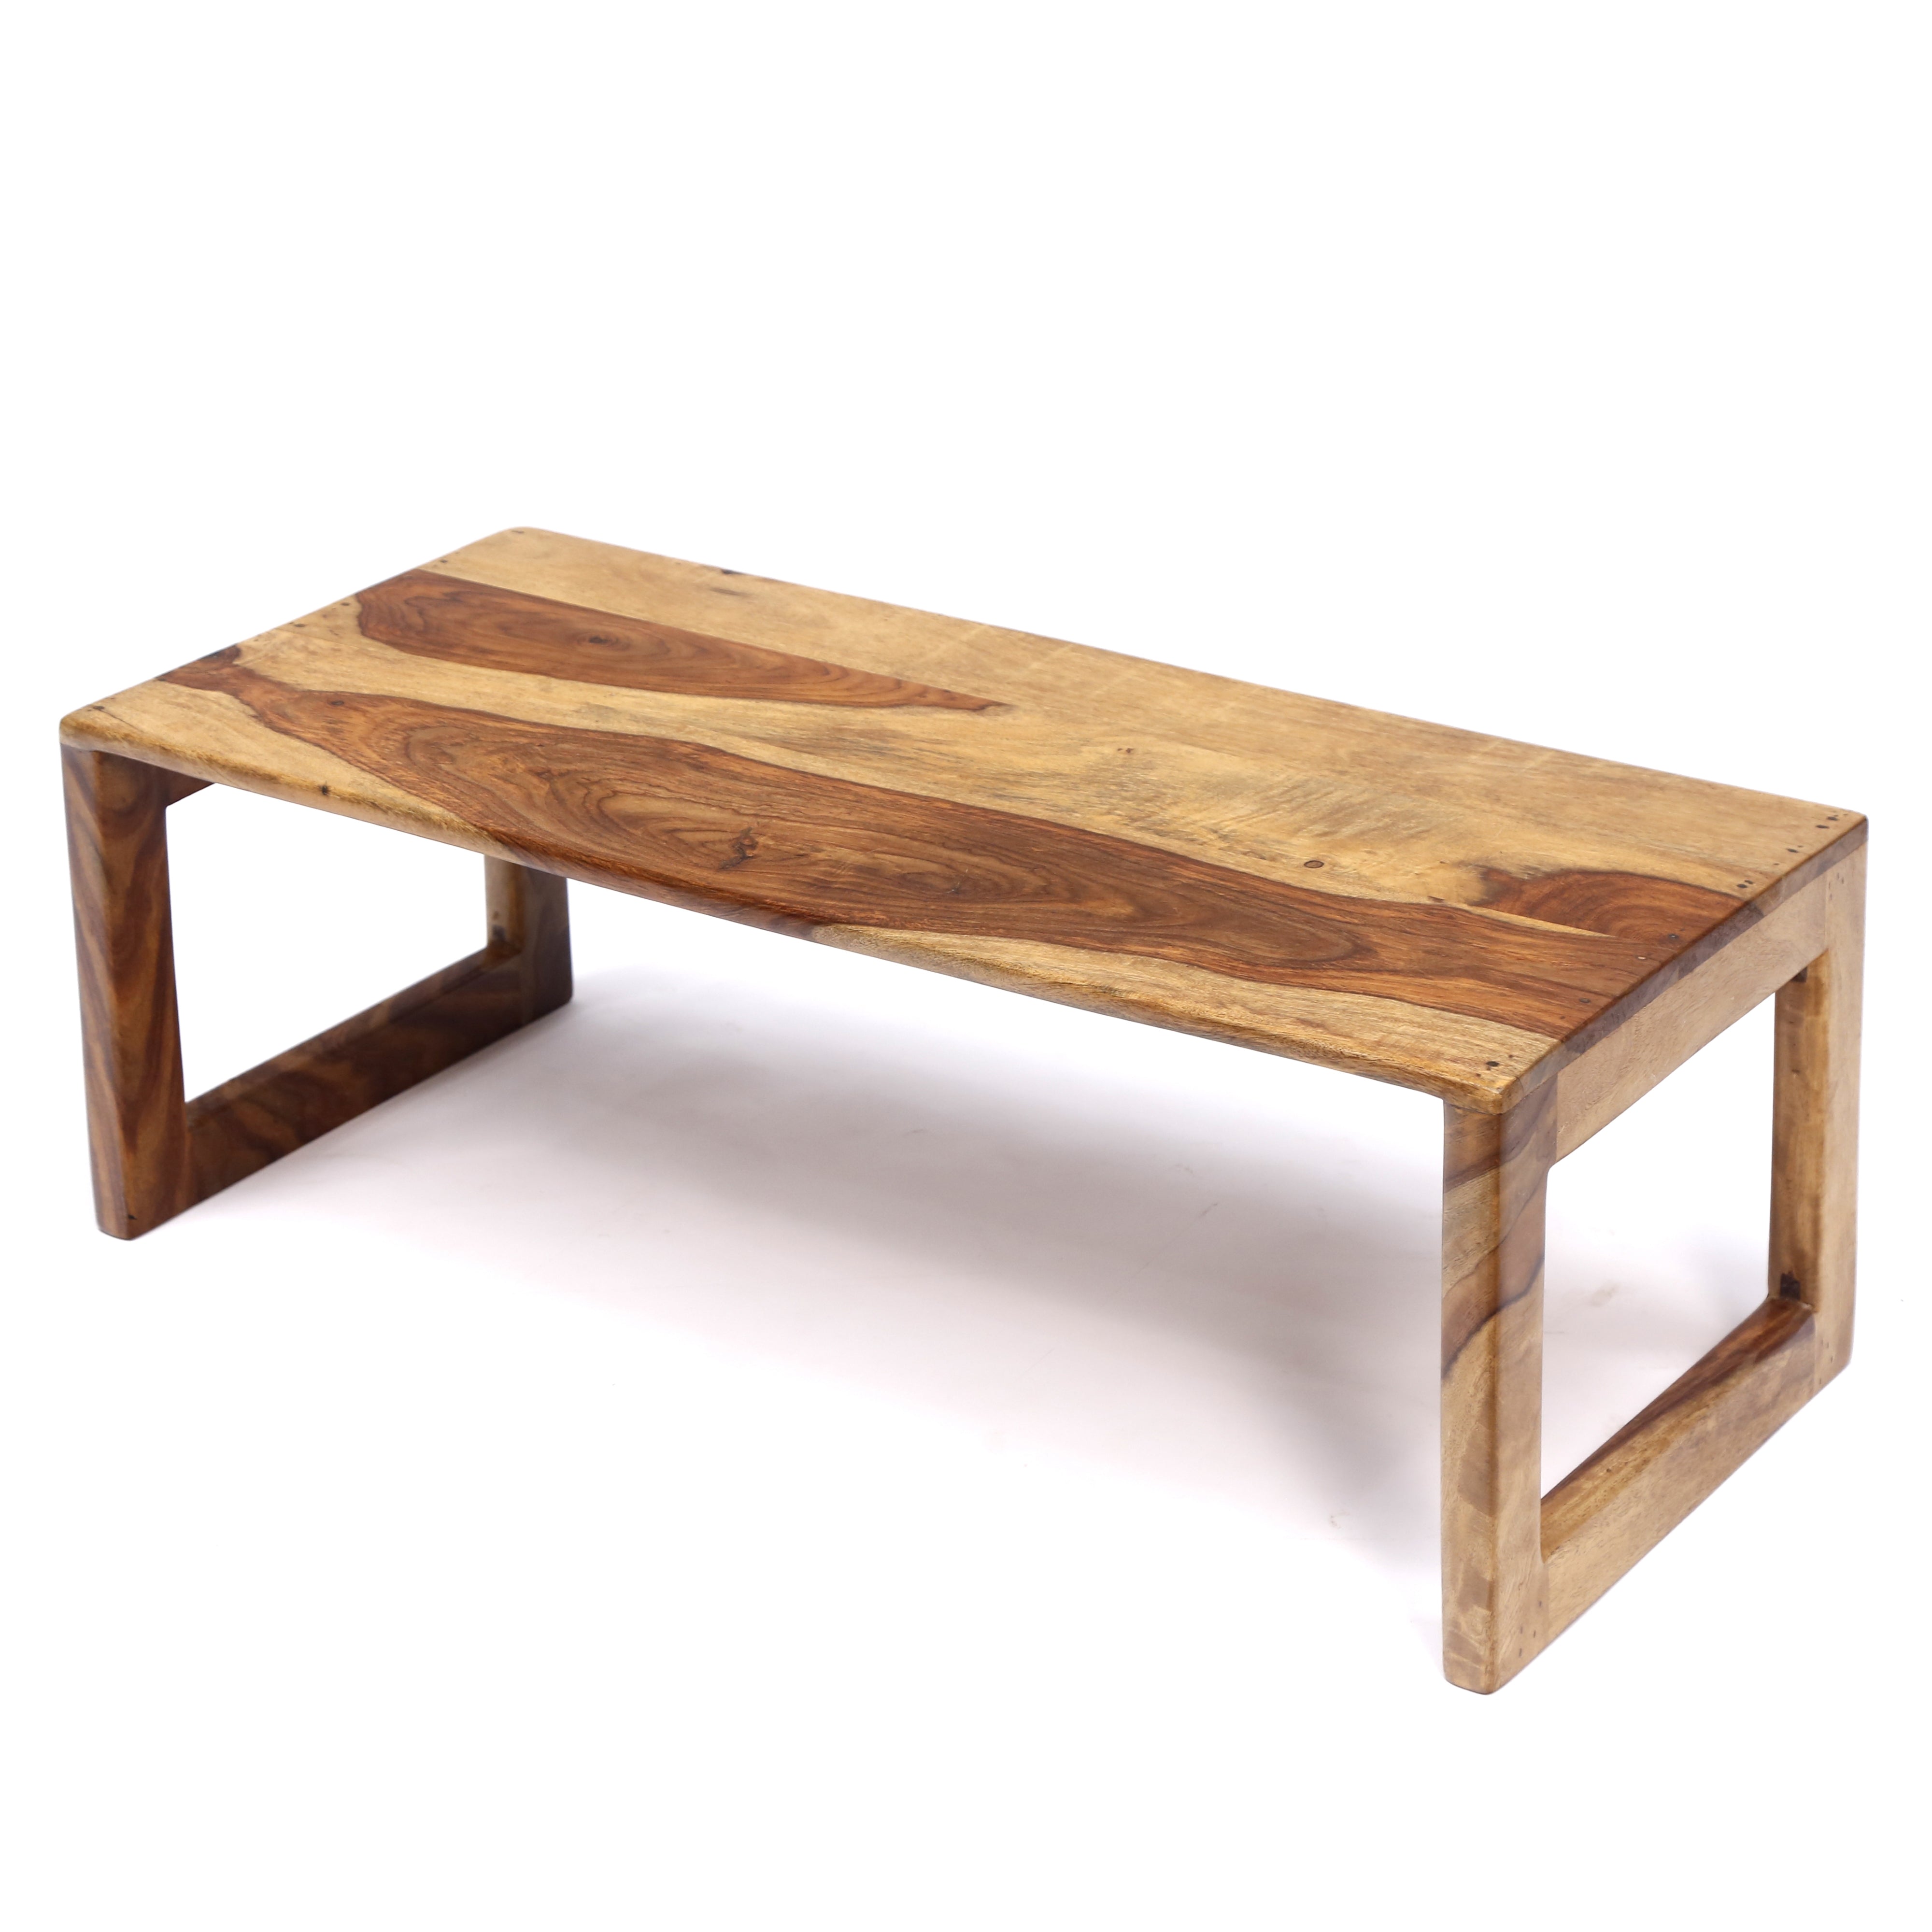 Sheesham wood American Finish Centre Folding Table Coffee Table